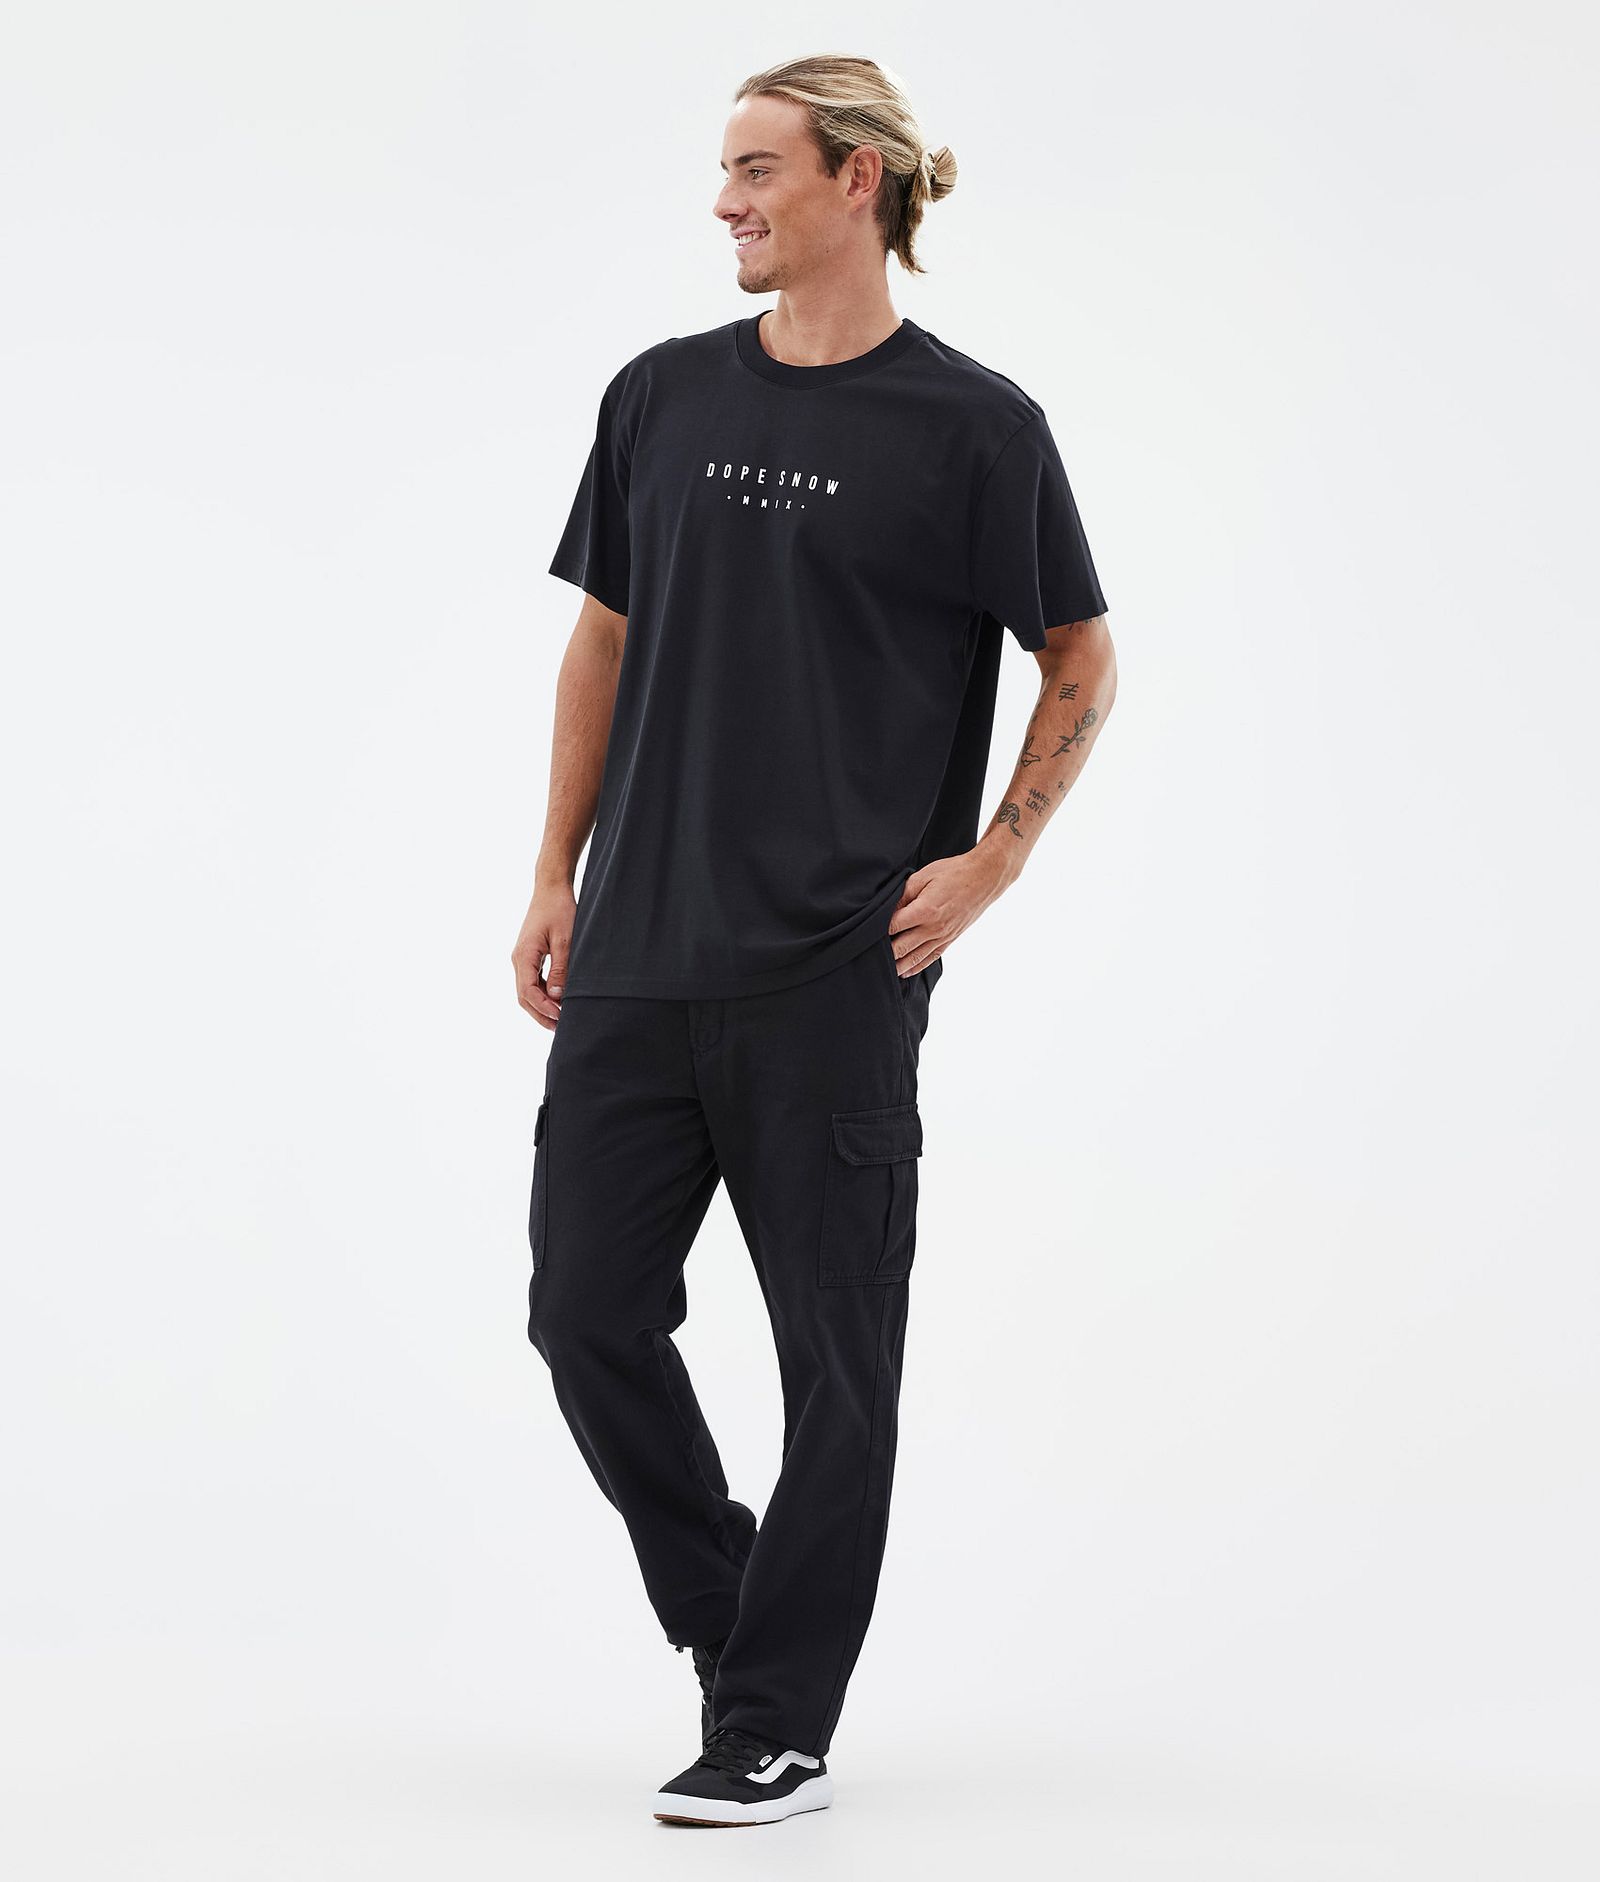 Standard T-shirt Uomo Silhouette Black